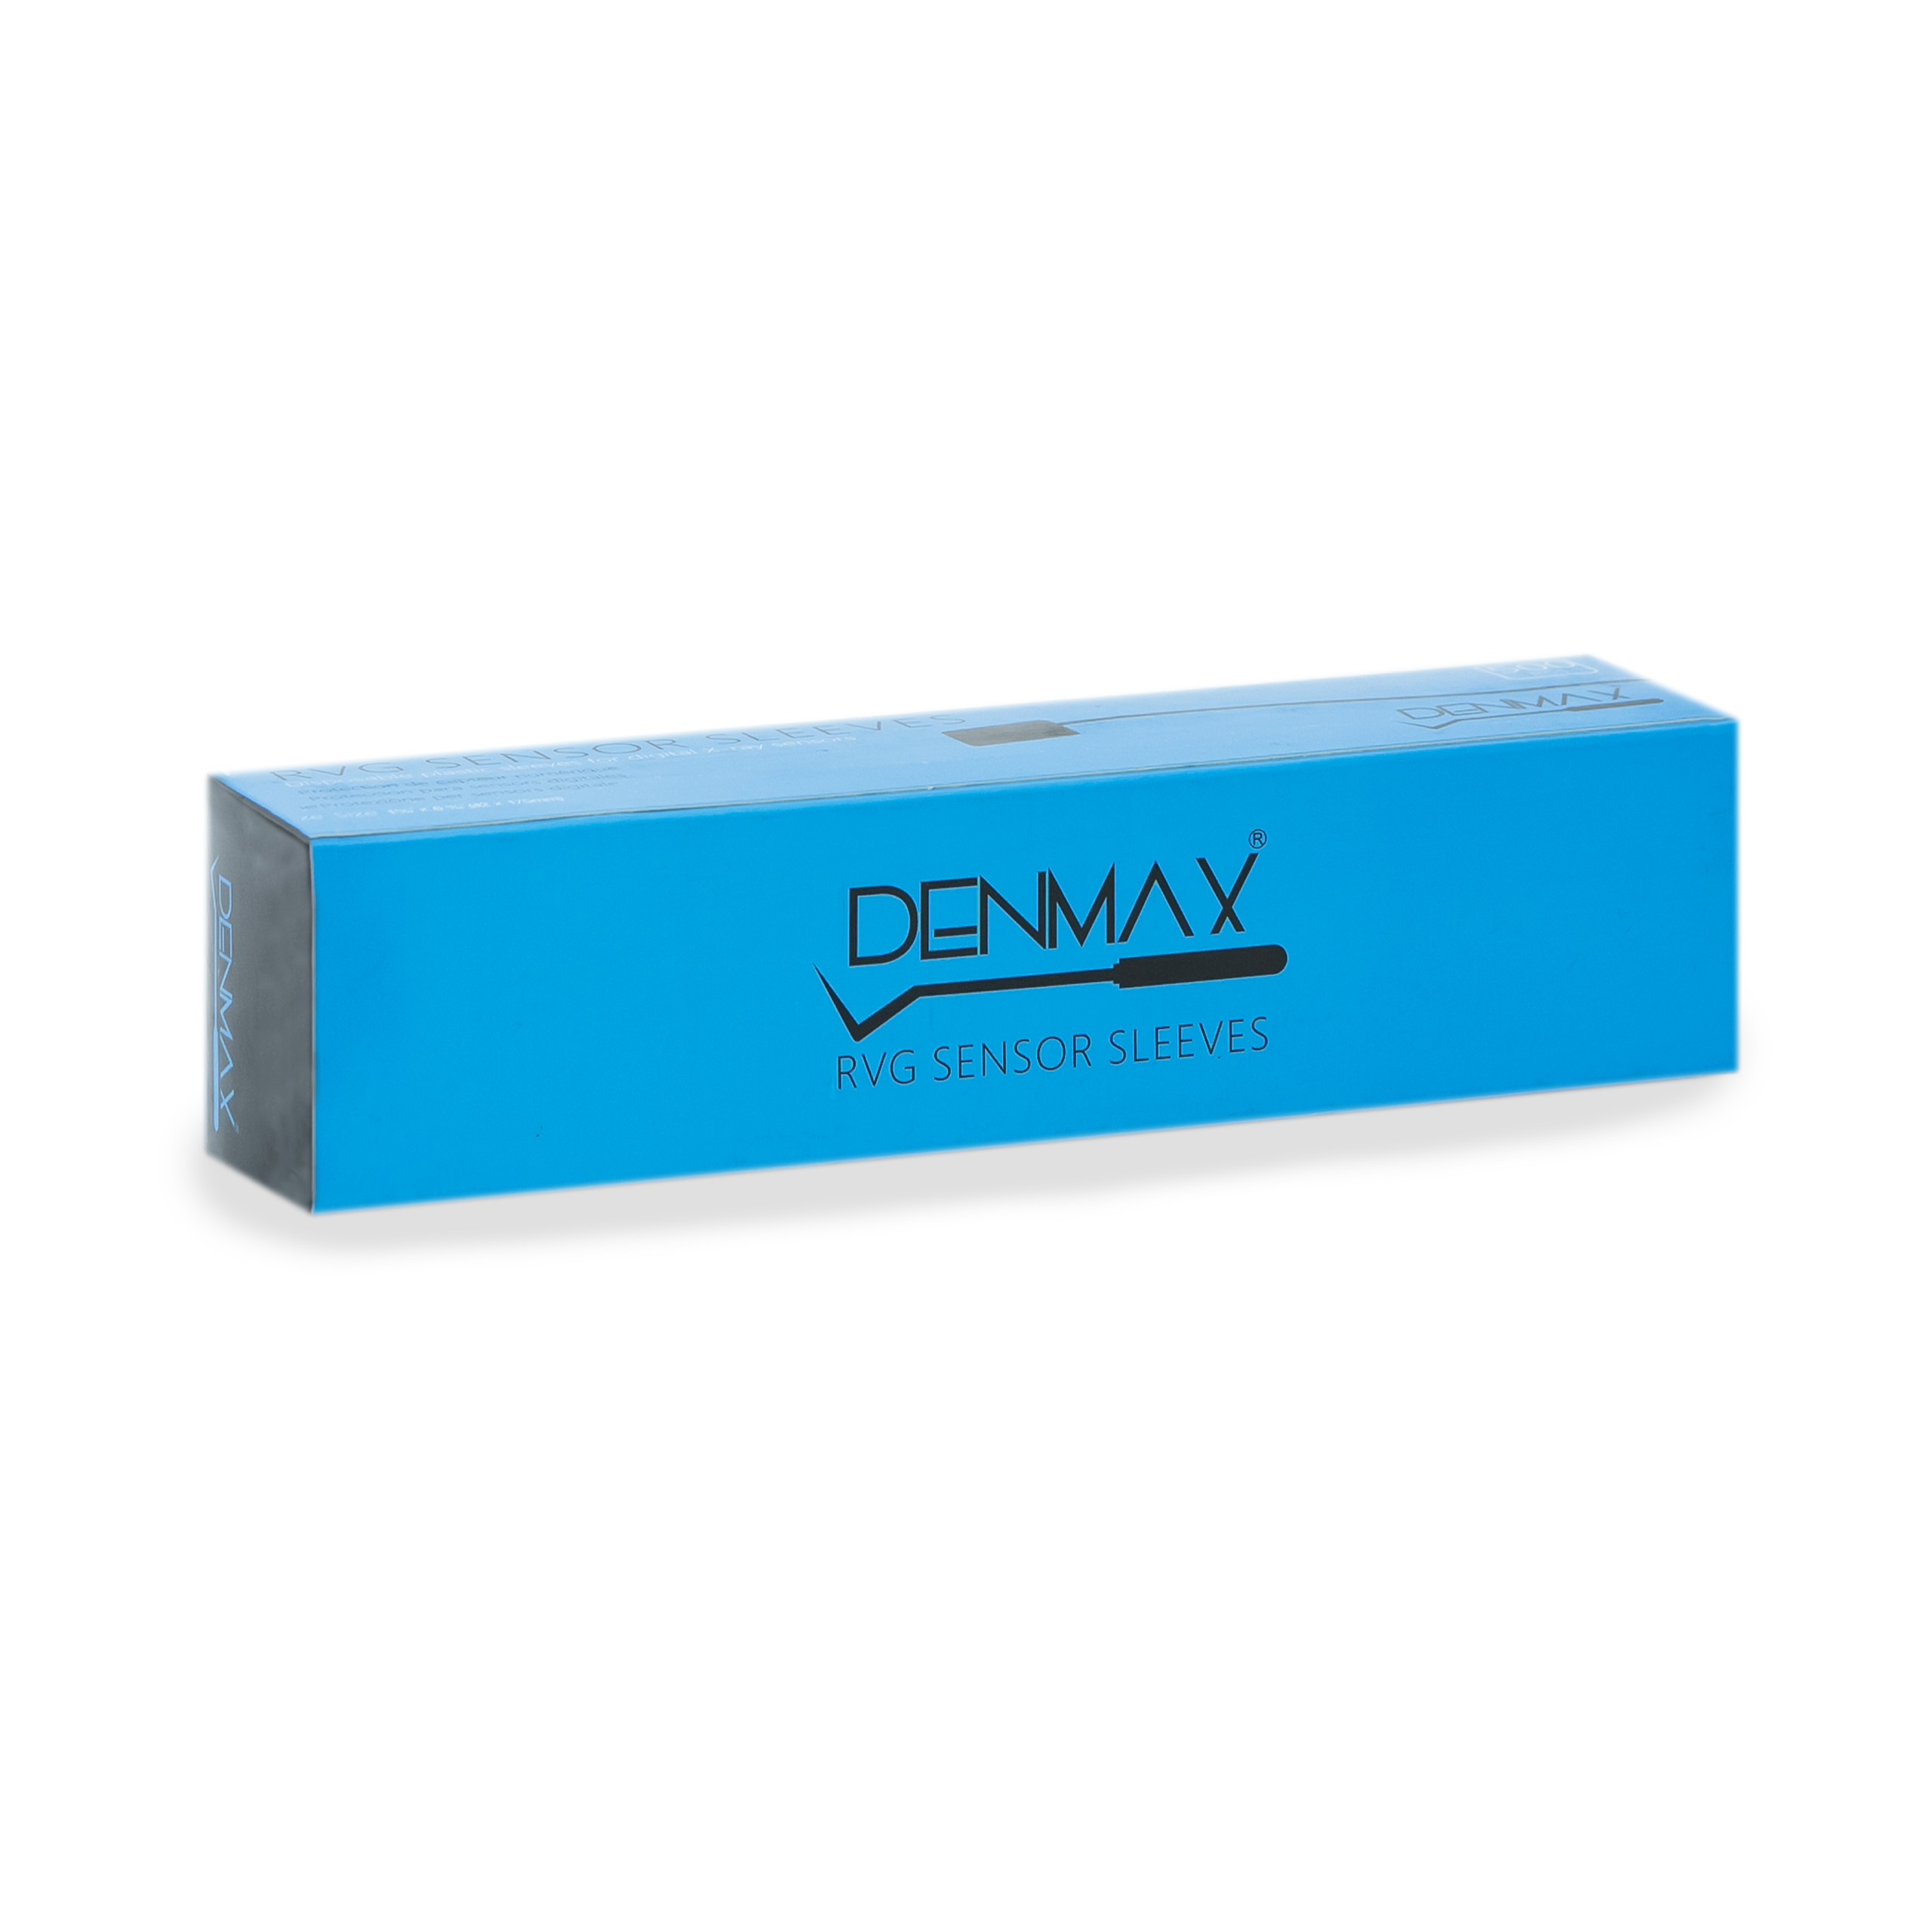 Denmax RVG Sensor Sleeves